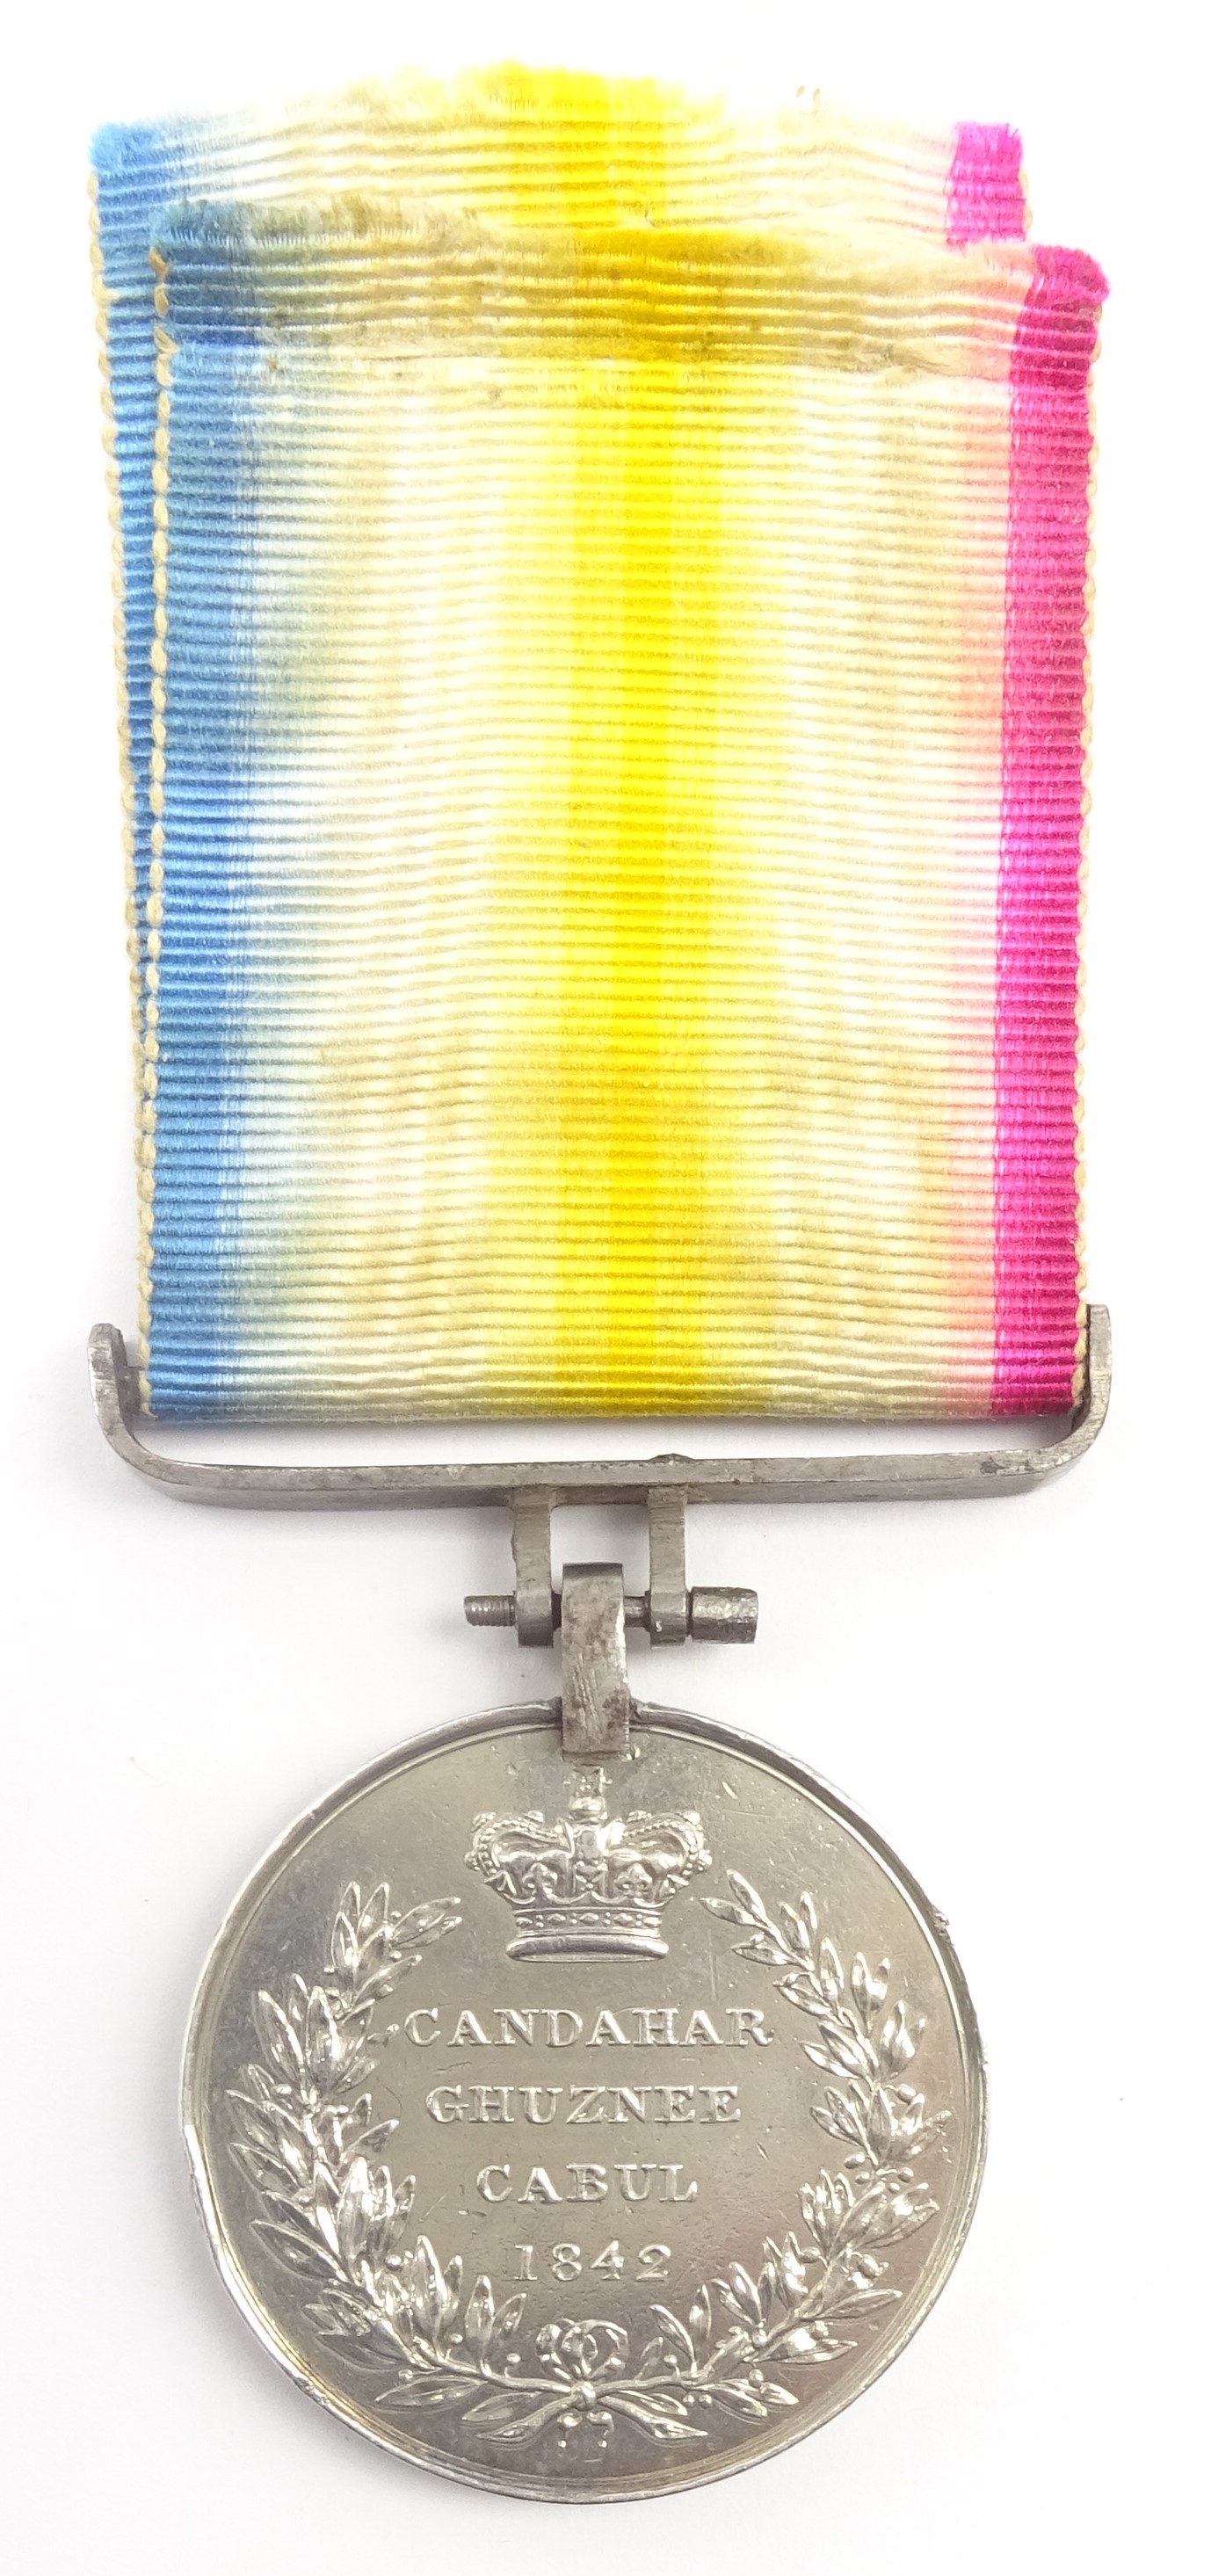 Victorian Candahar Ghuznee Cabul Afghanistan medal awarded to Benjn. Beech 41st Regt. - Image 2 of 3